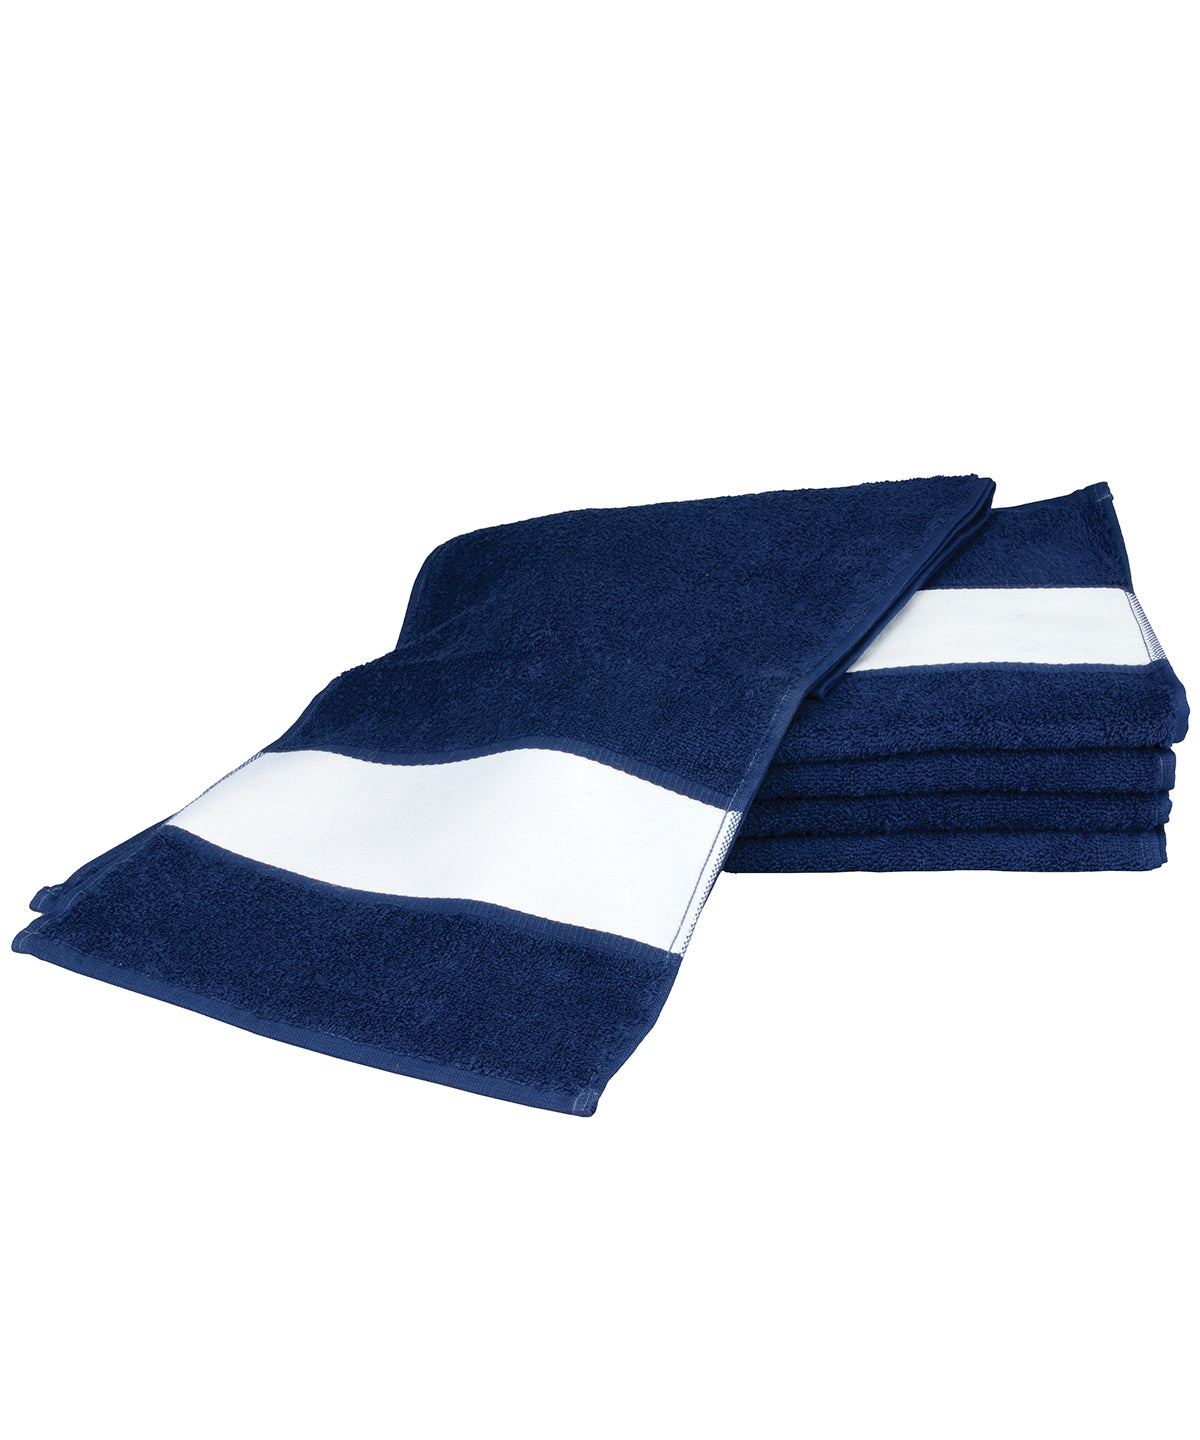 ARTG® SUBLI-Me® sport towel